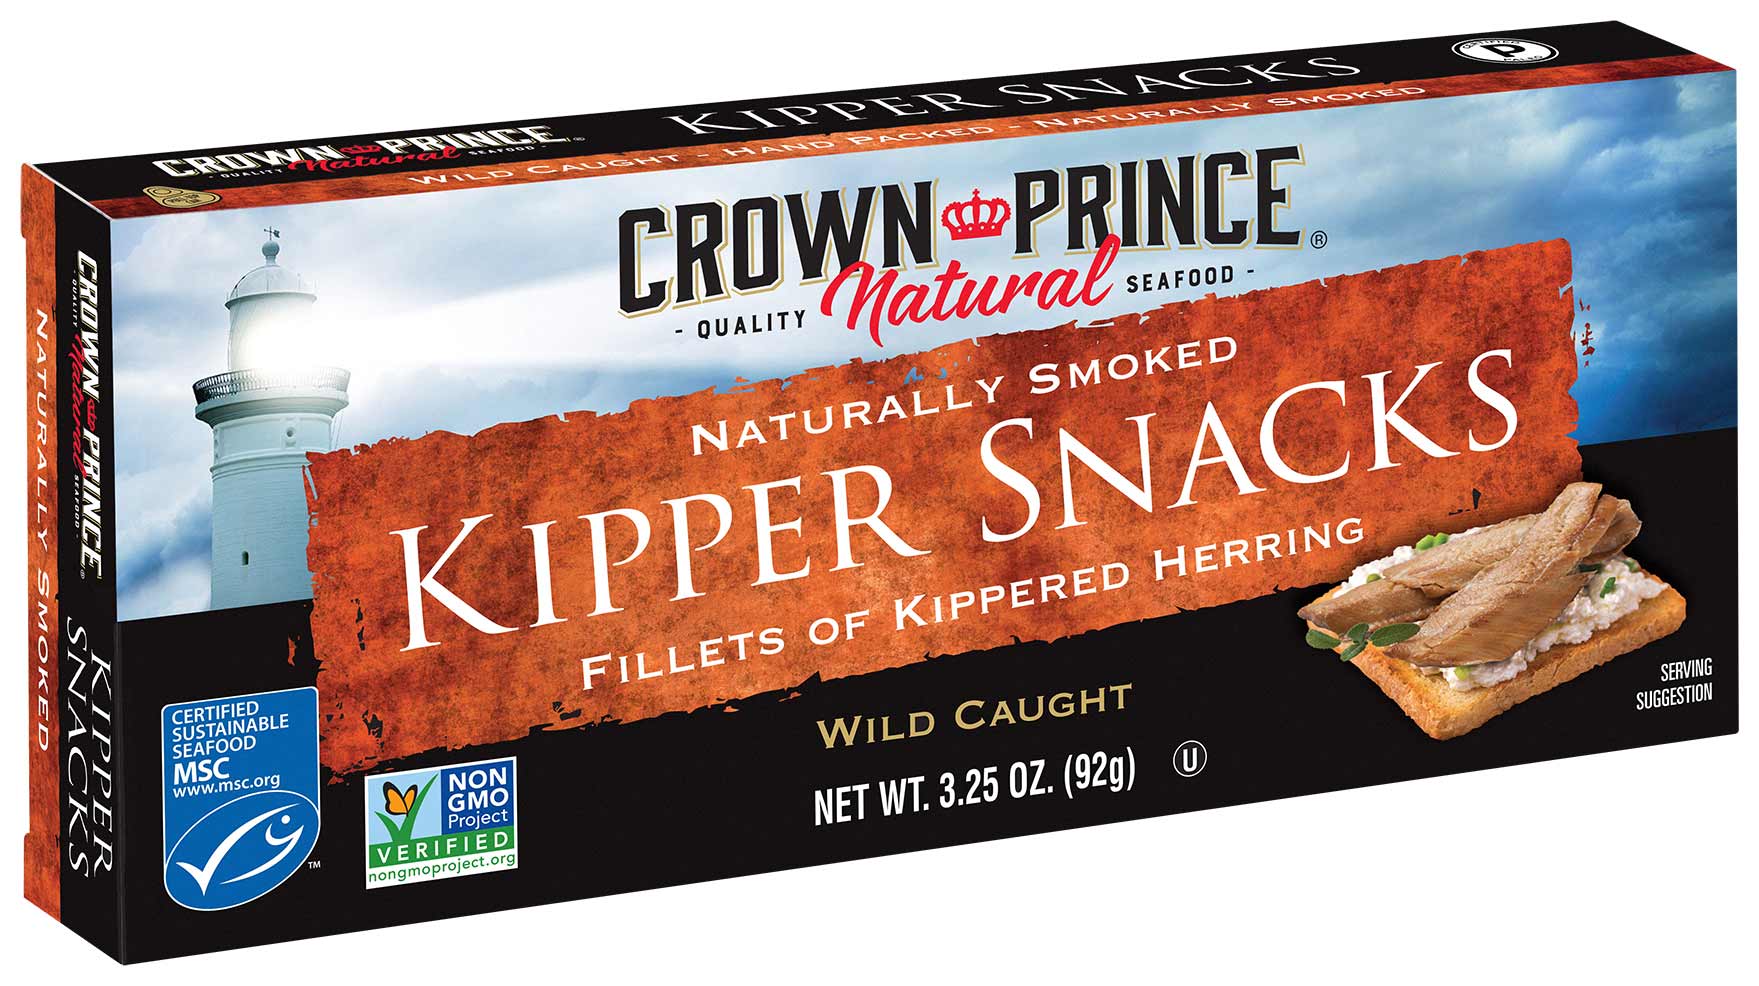 Crown Prince Natural Kipper Snacks